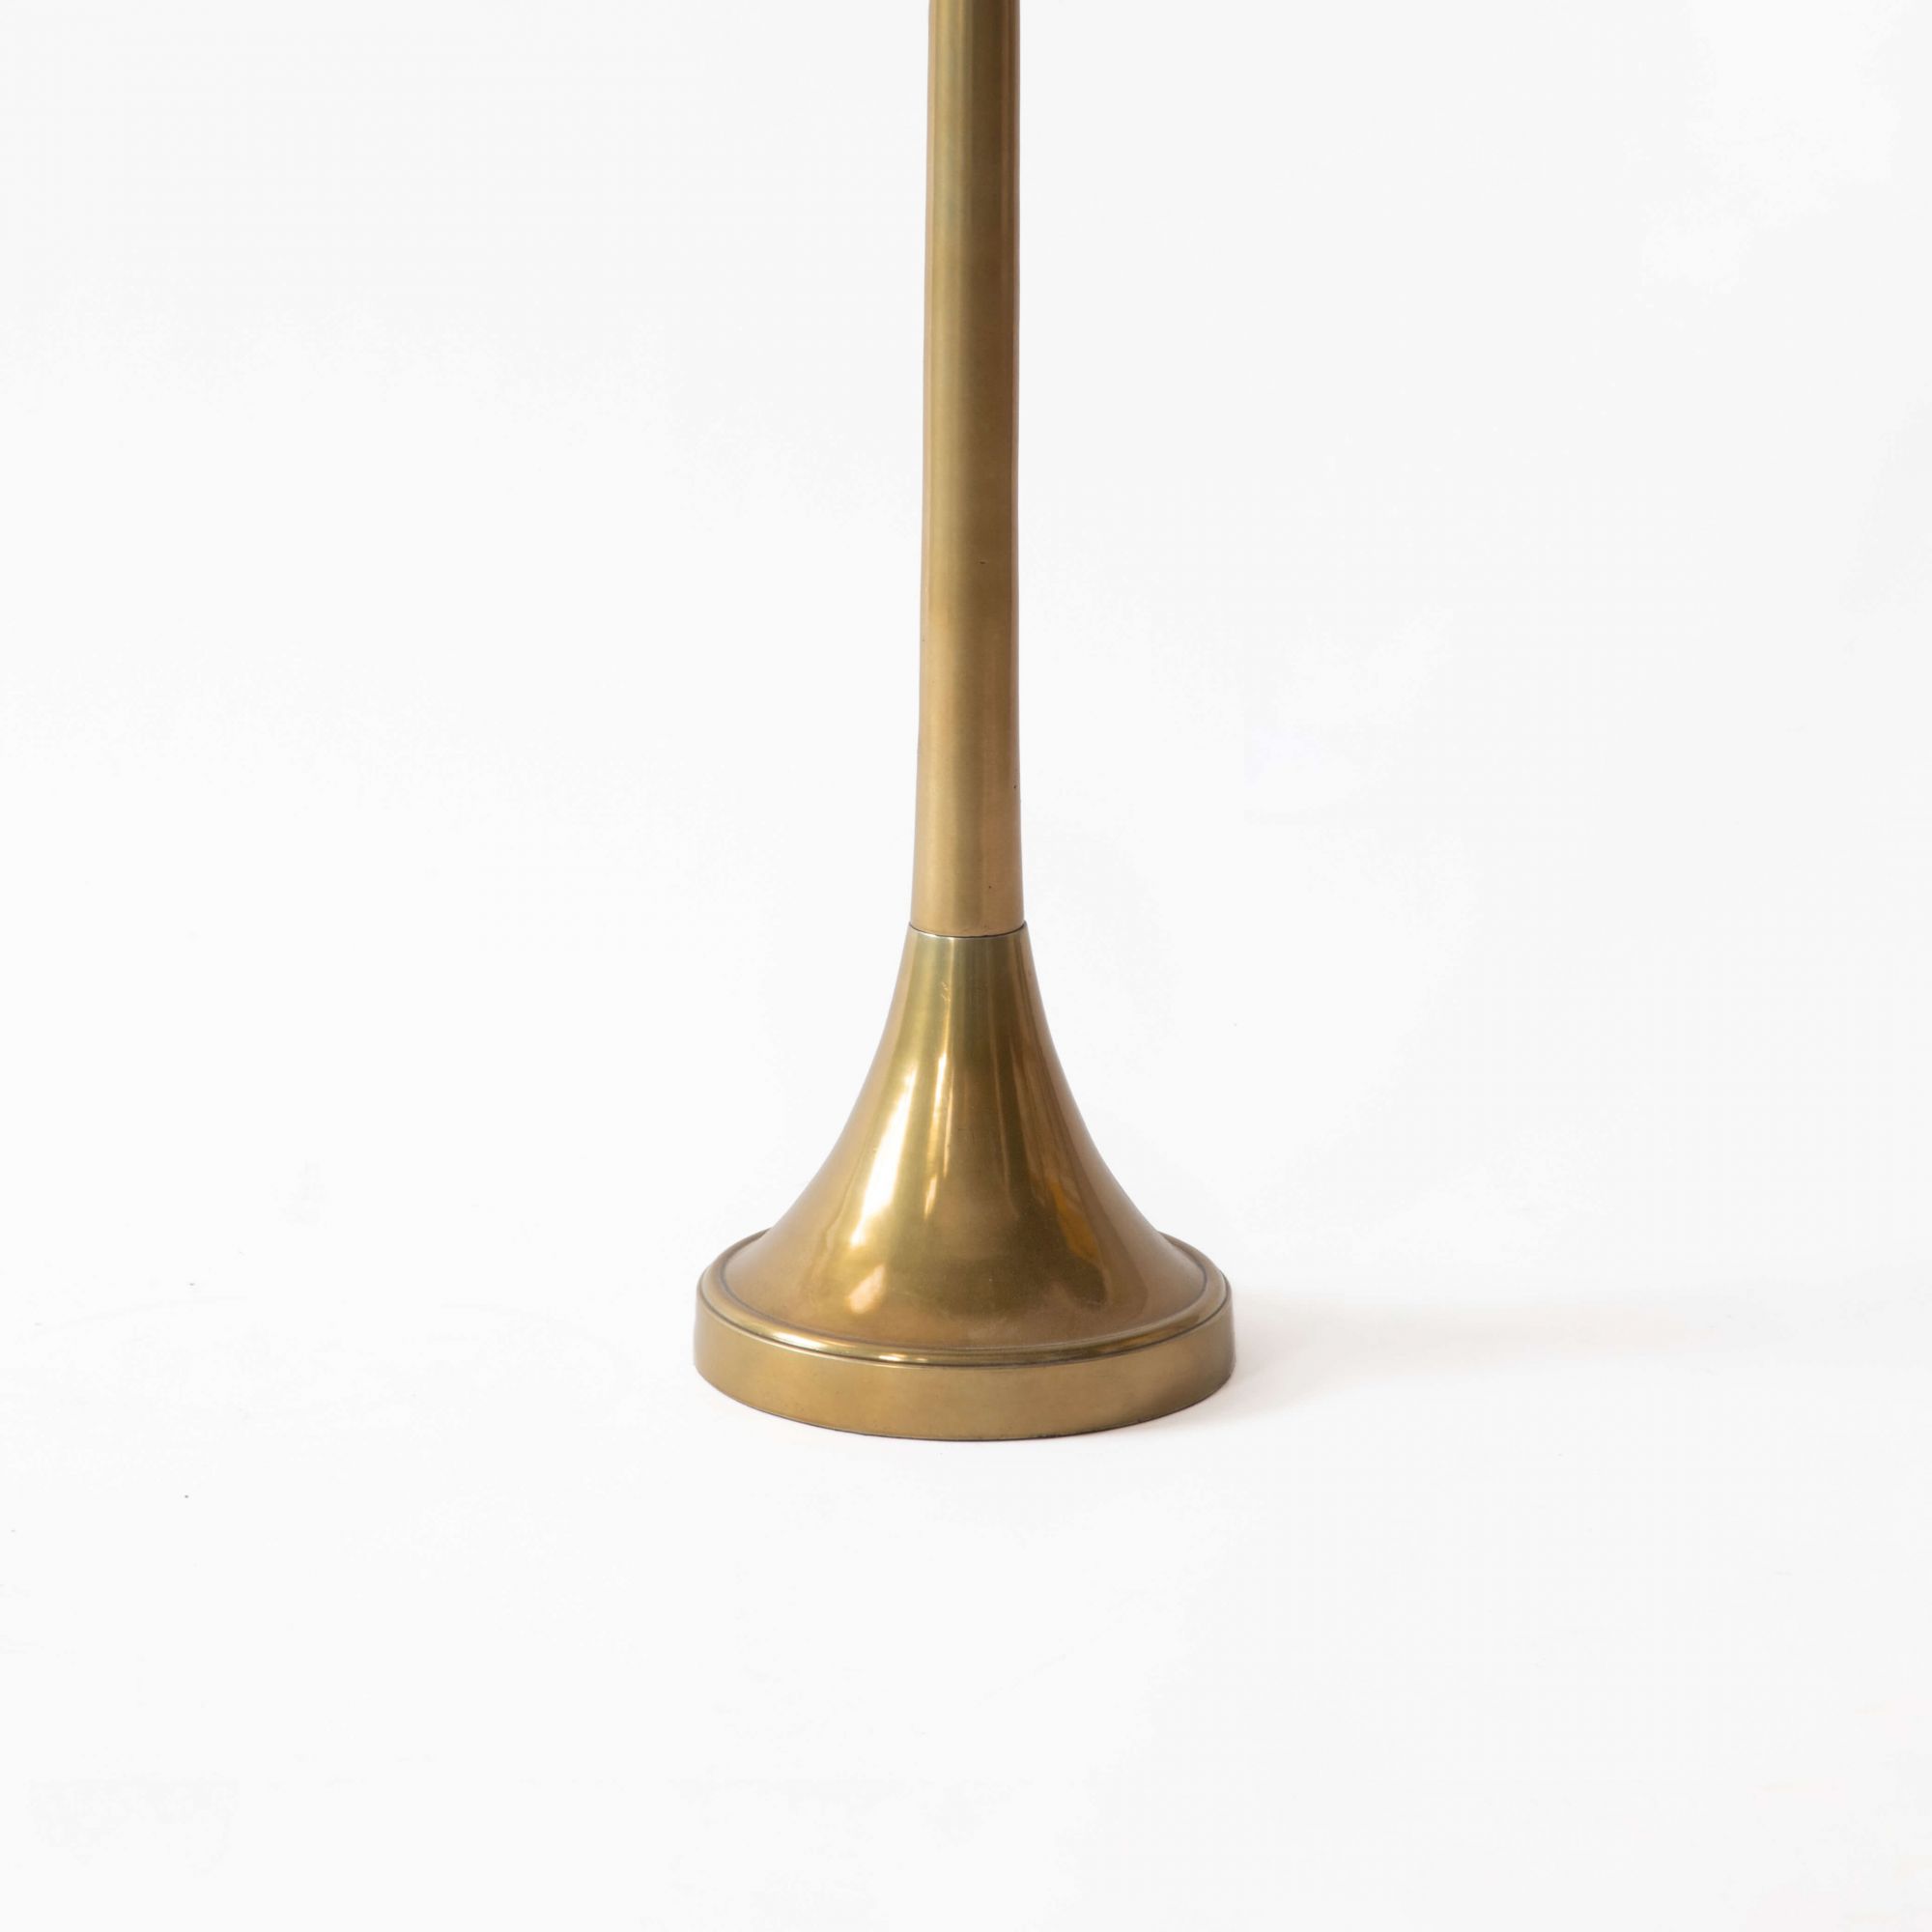 Vermont Candlestick Holder - Brass